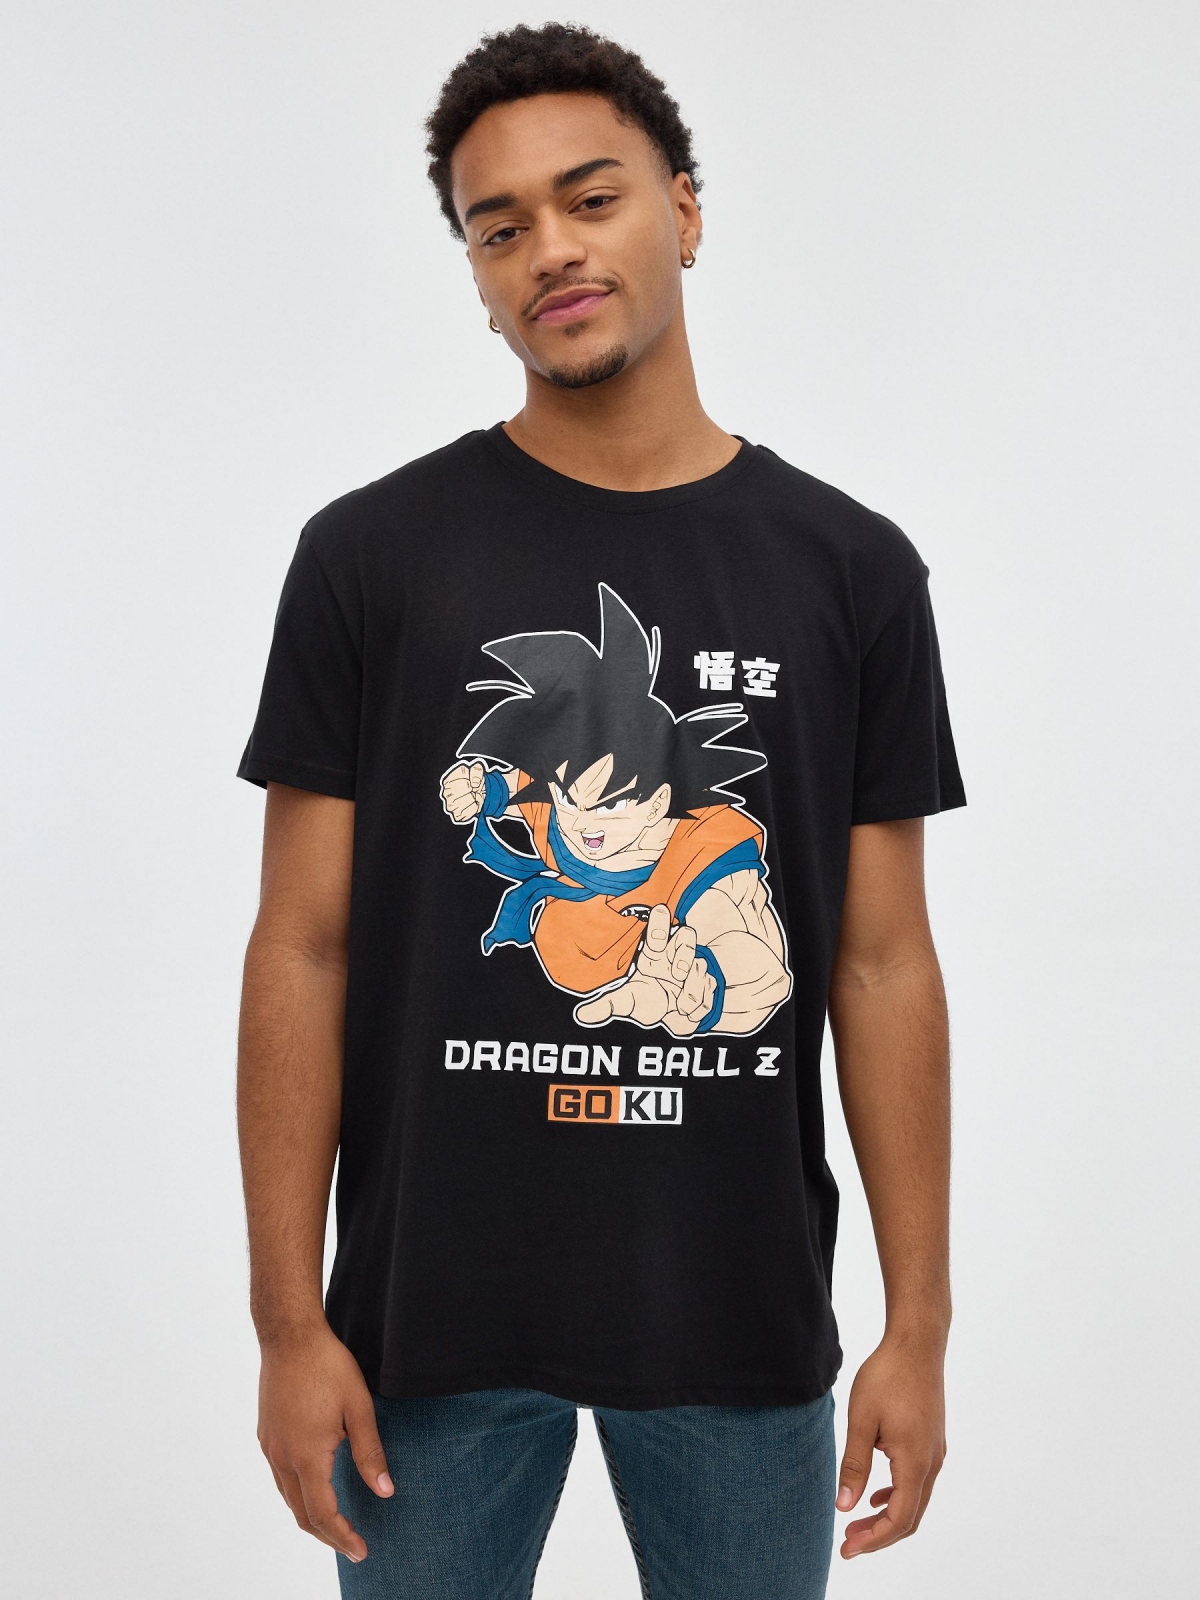 T-shirt Dragon Ball preto vista meia frontal